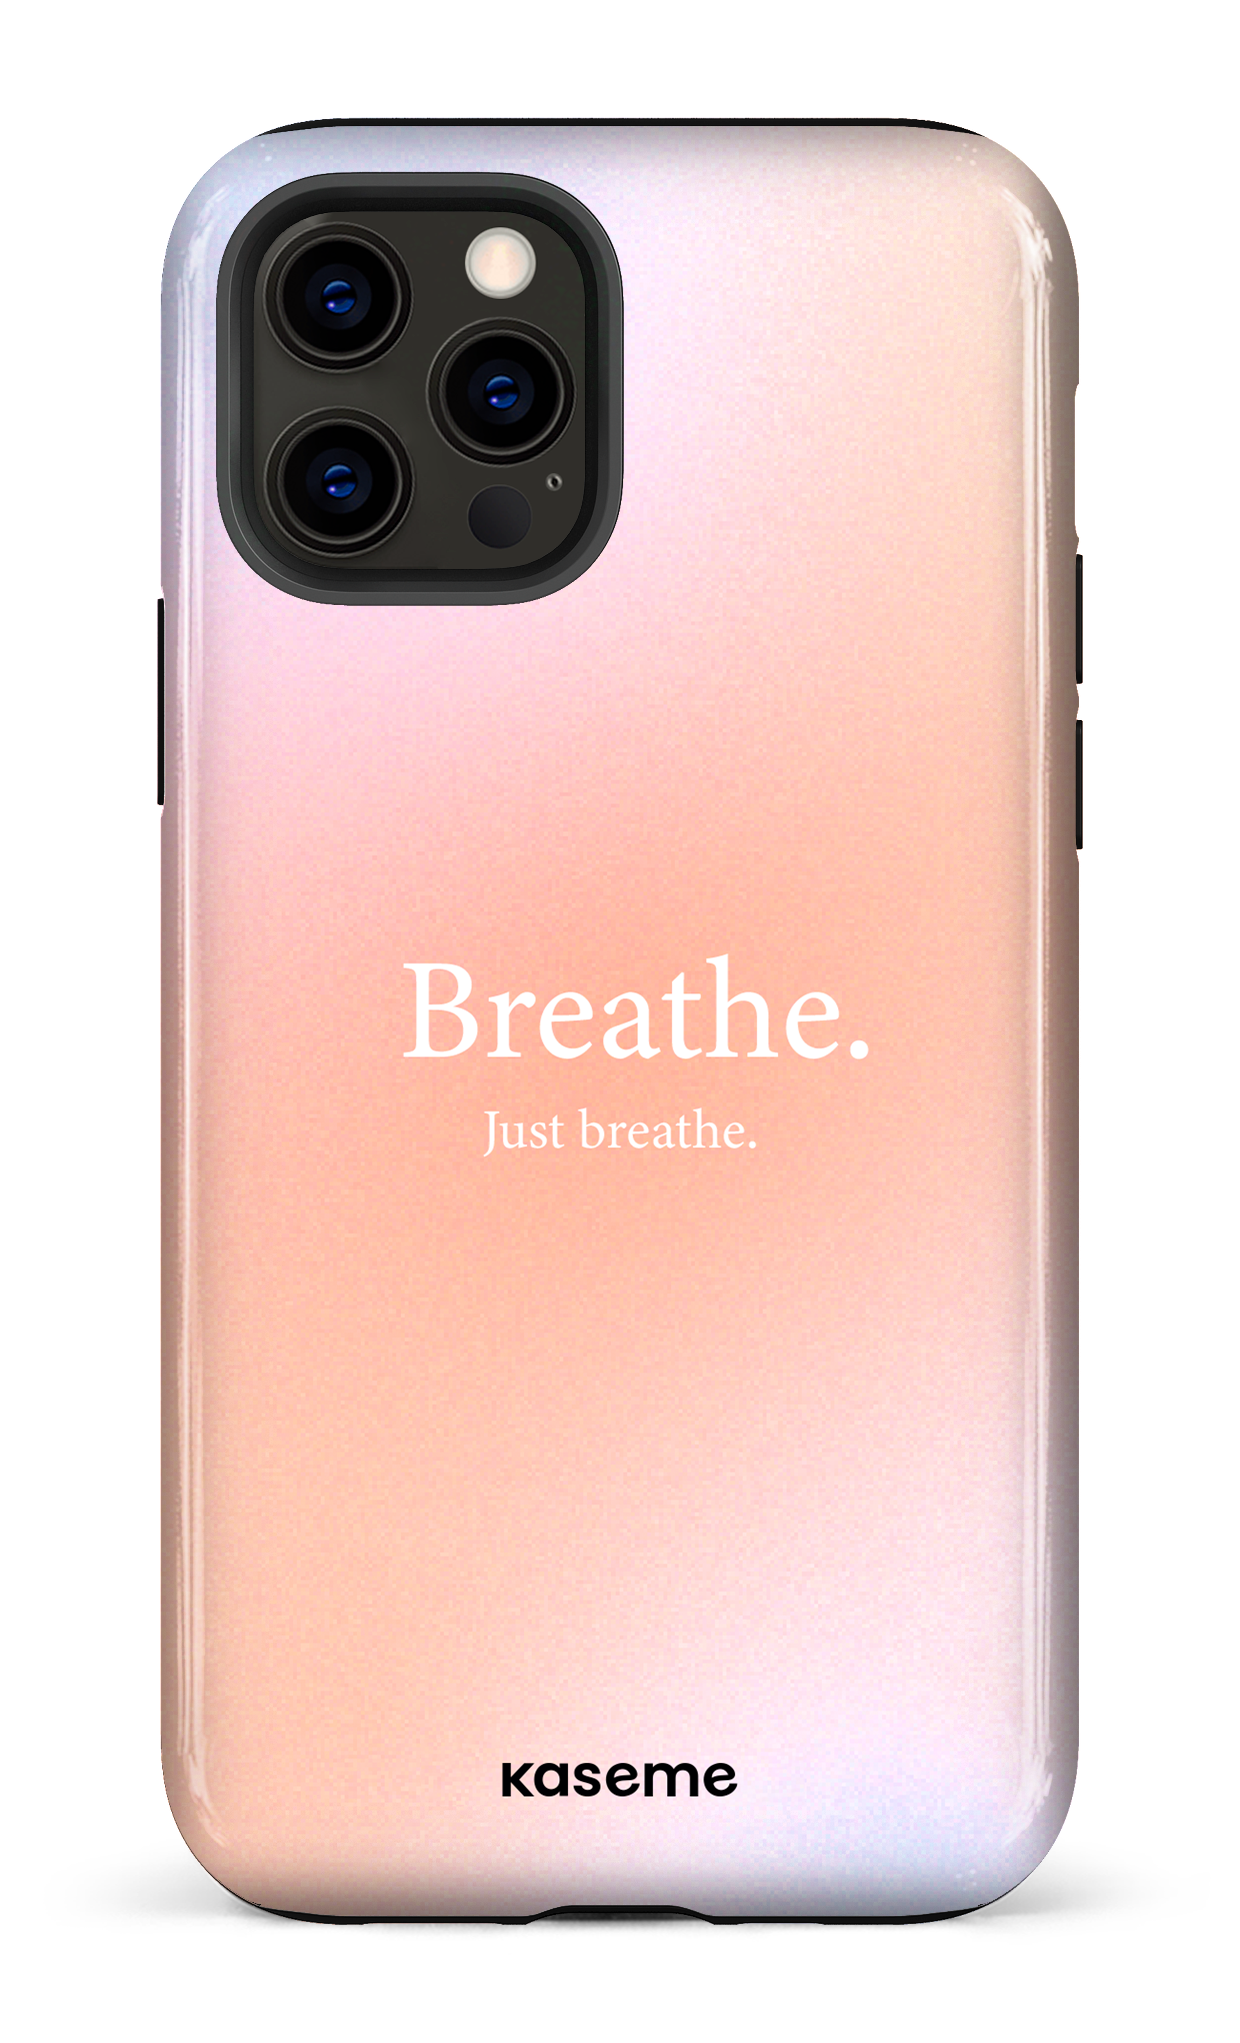 Just breathe - iPhone 12 Pro